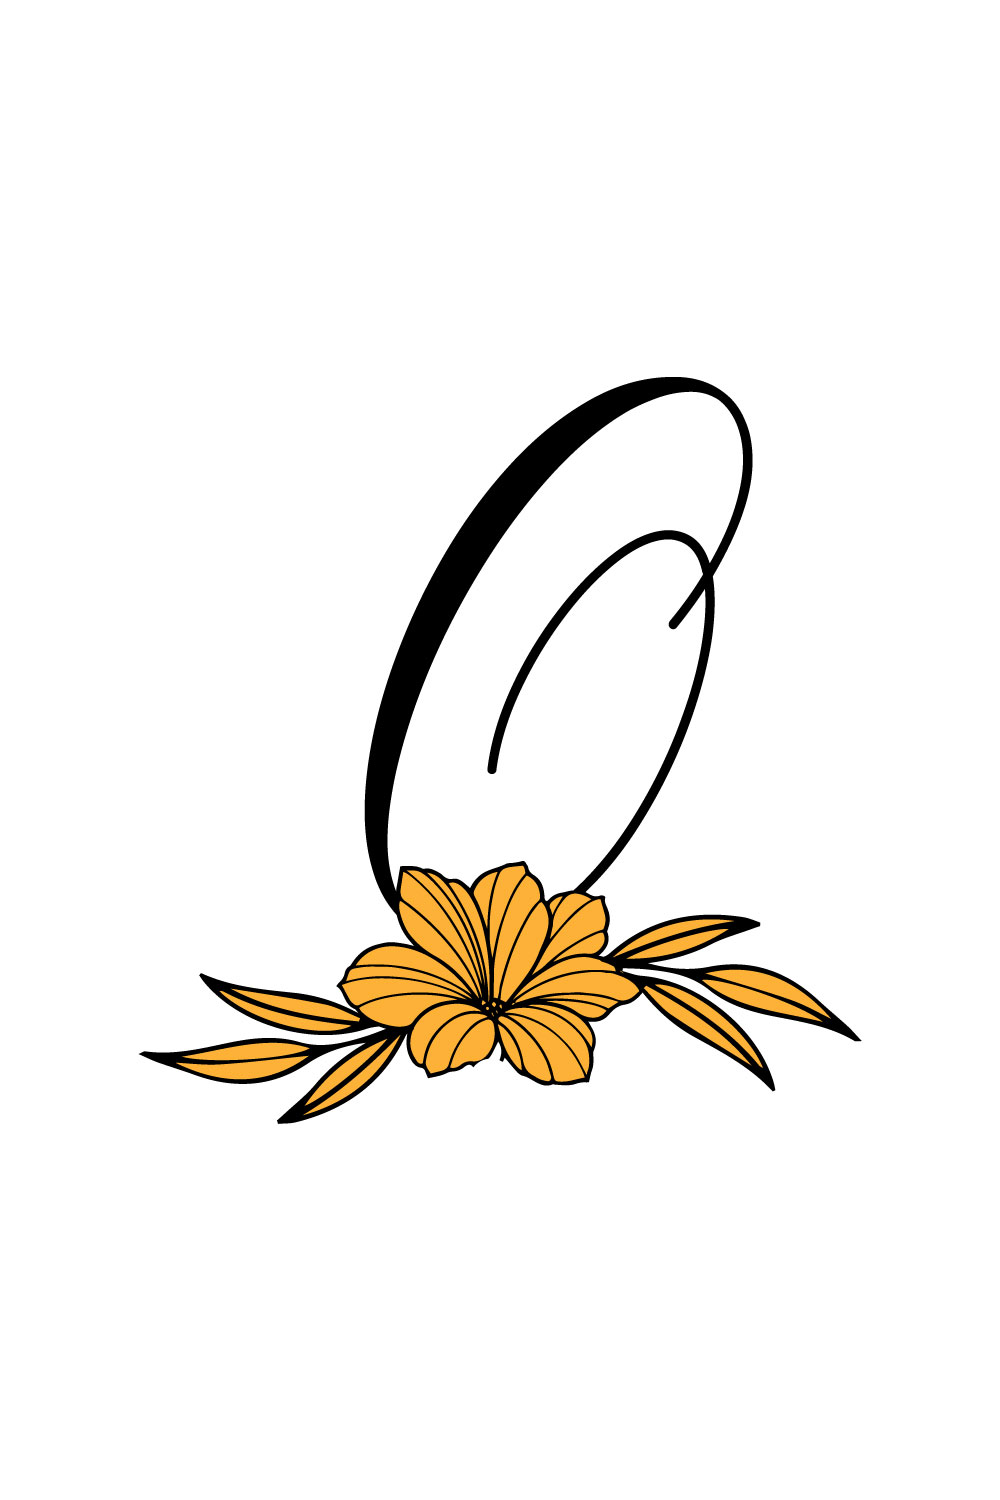 Free O Letter Wedding Flower Logo pinterest preview image.